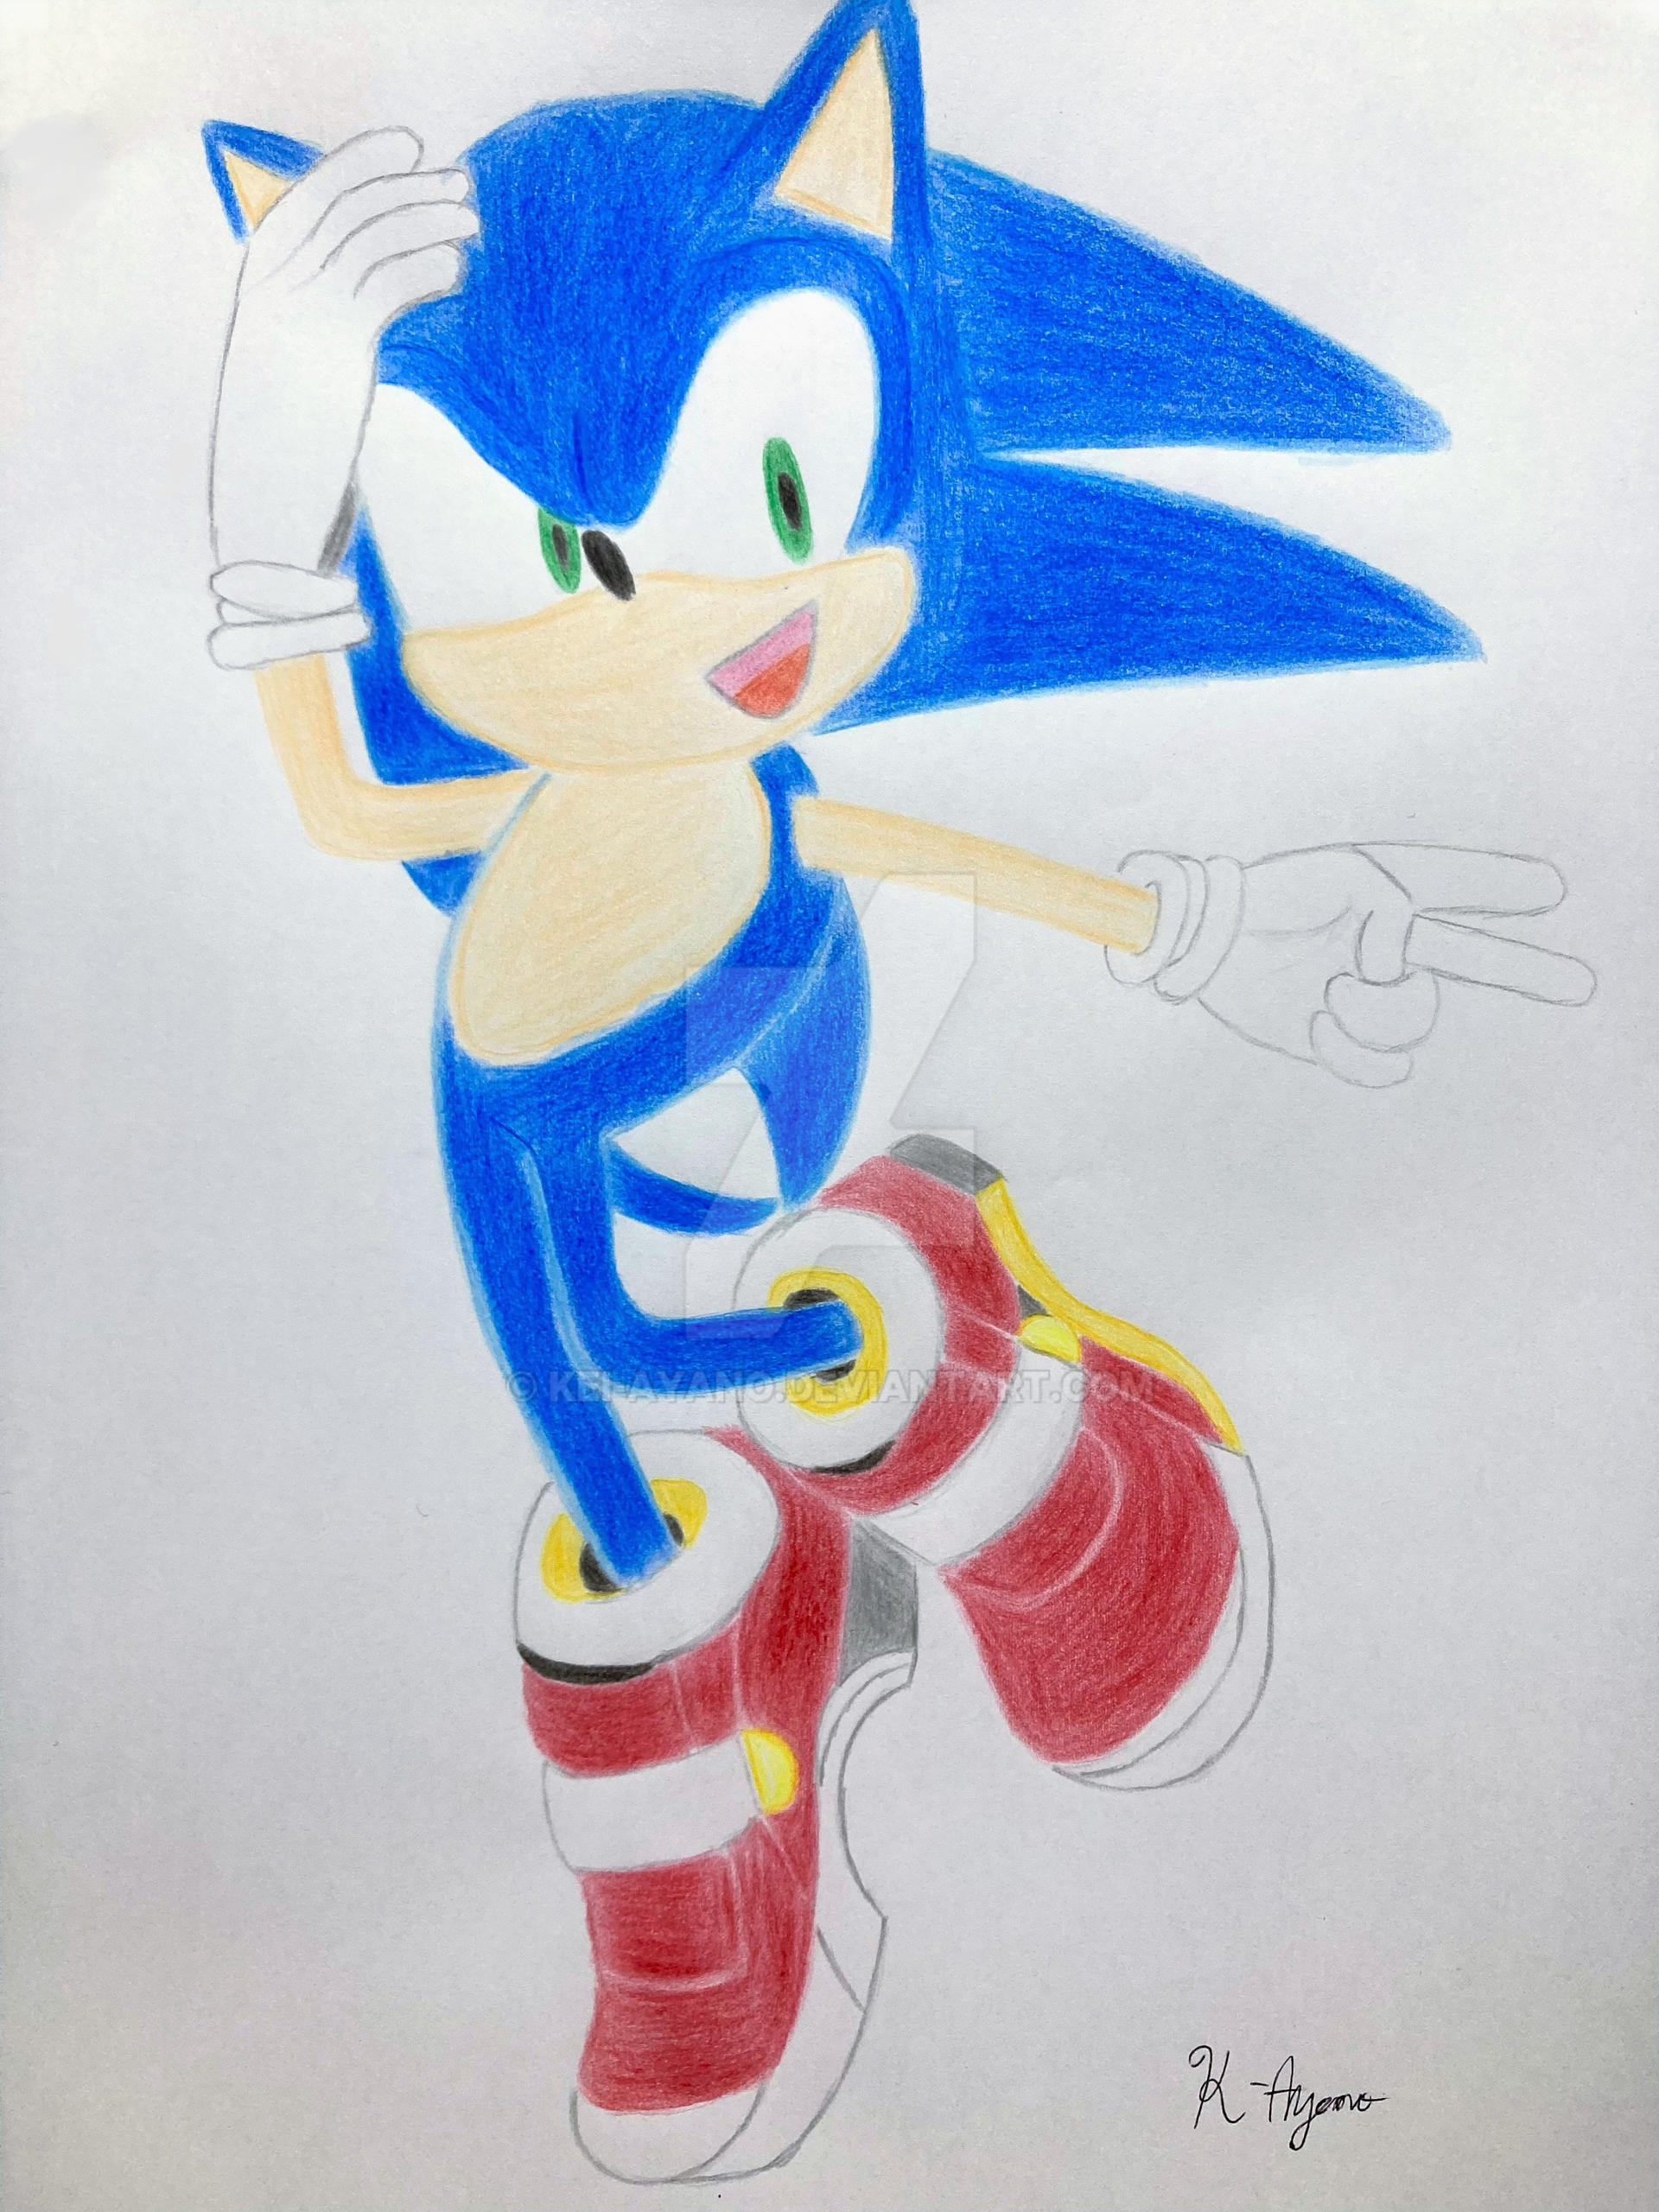 Lil' Tails Baby  Hedgehog art, Sonic fan art, Classic sonic